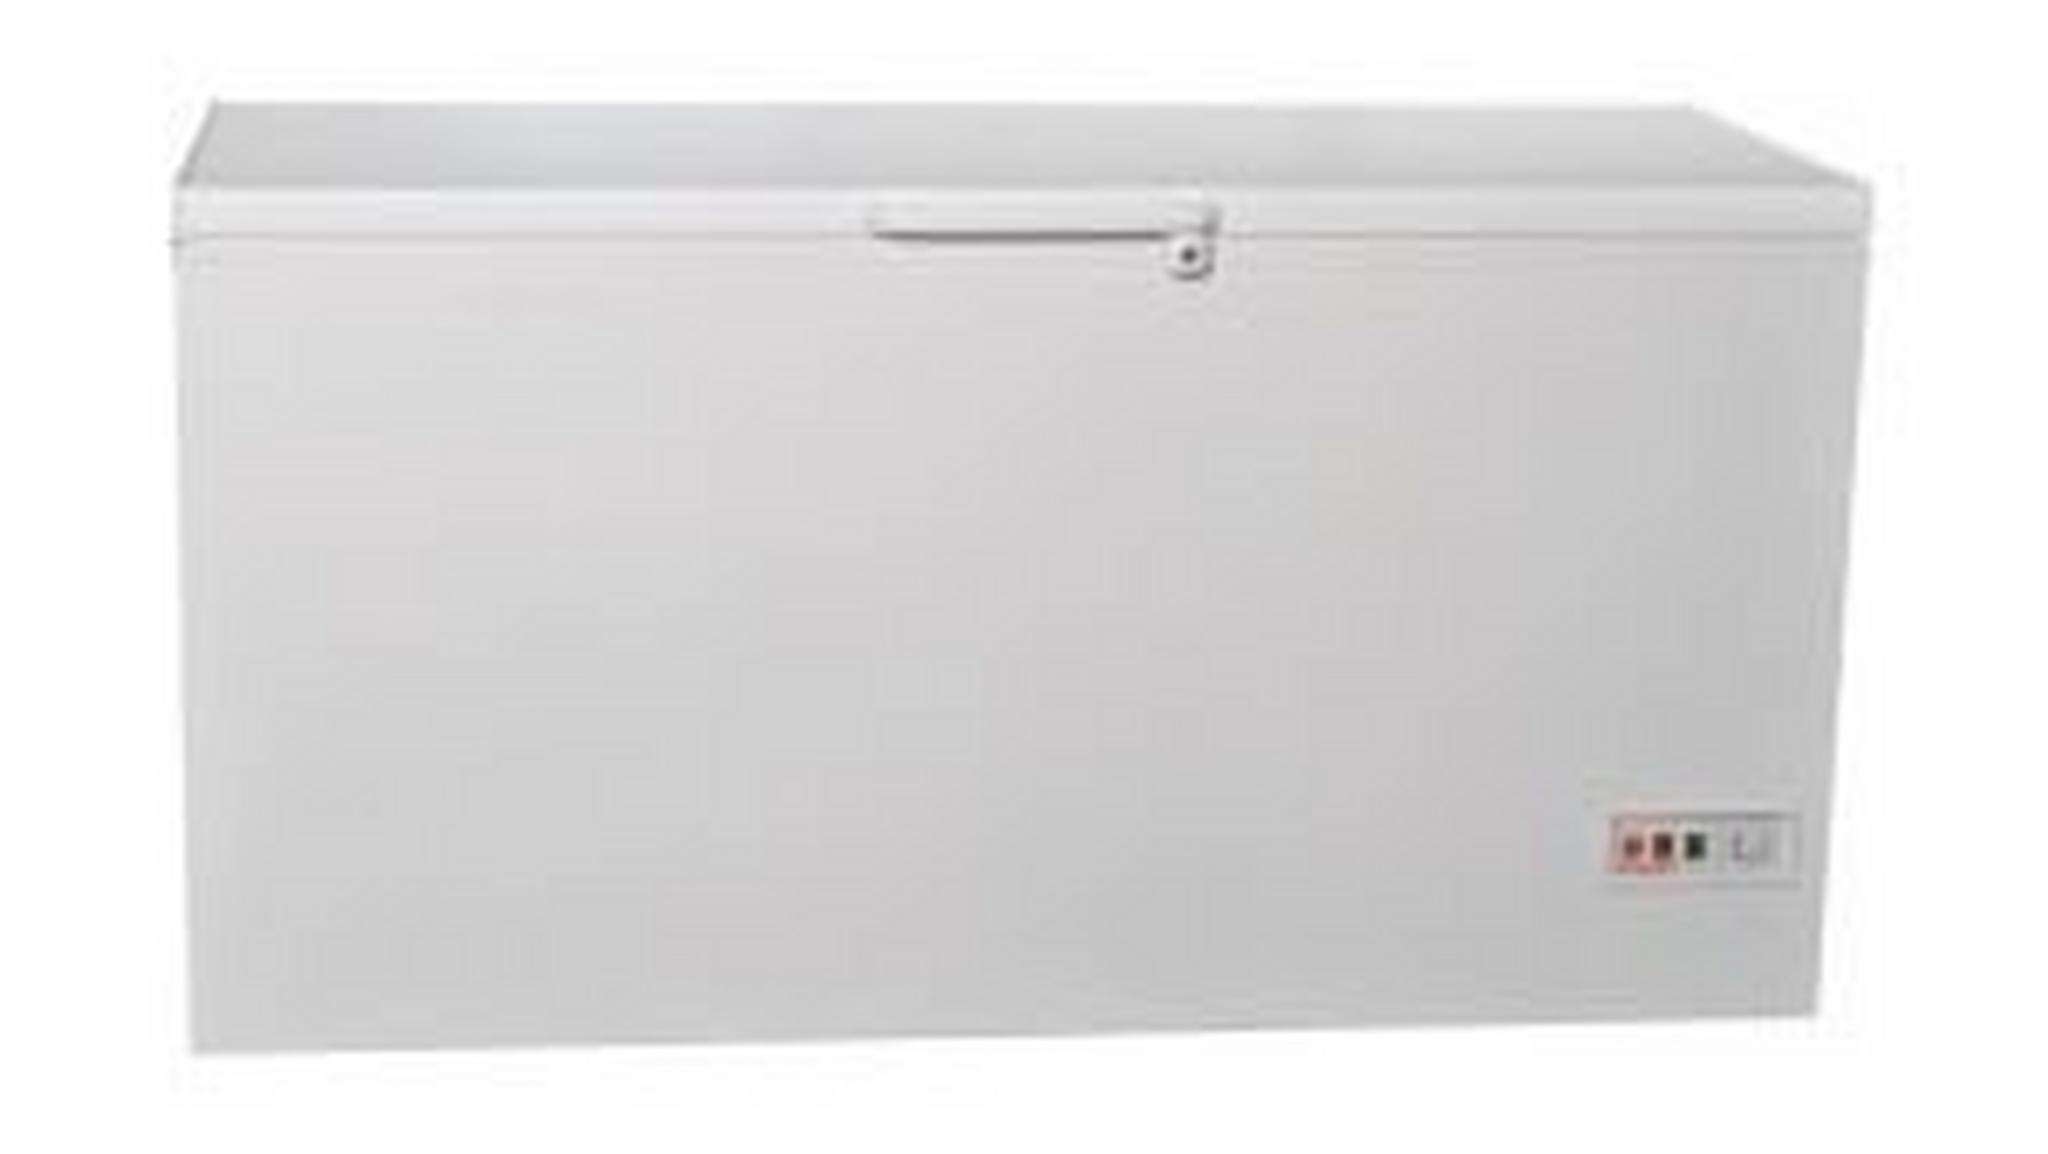 Wansa 19 CFT Chest Freezer (WC-600-WTB9) - White